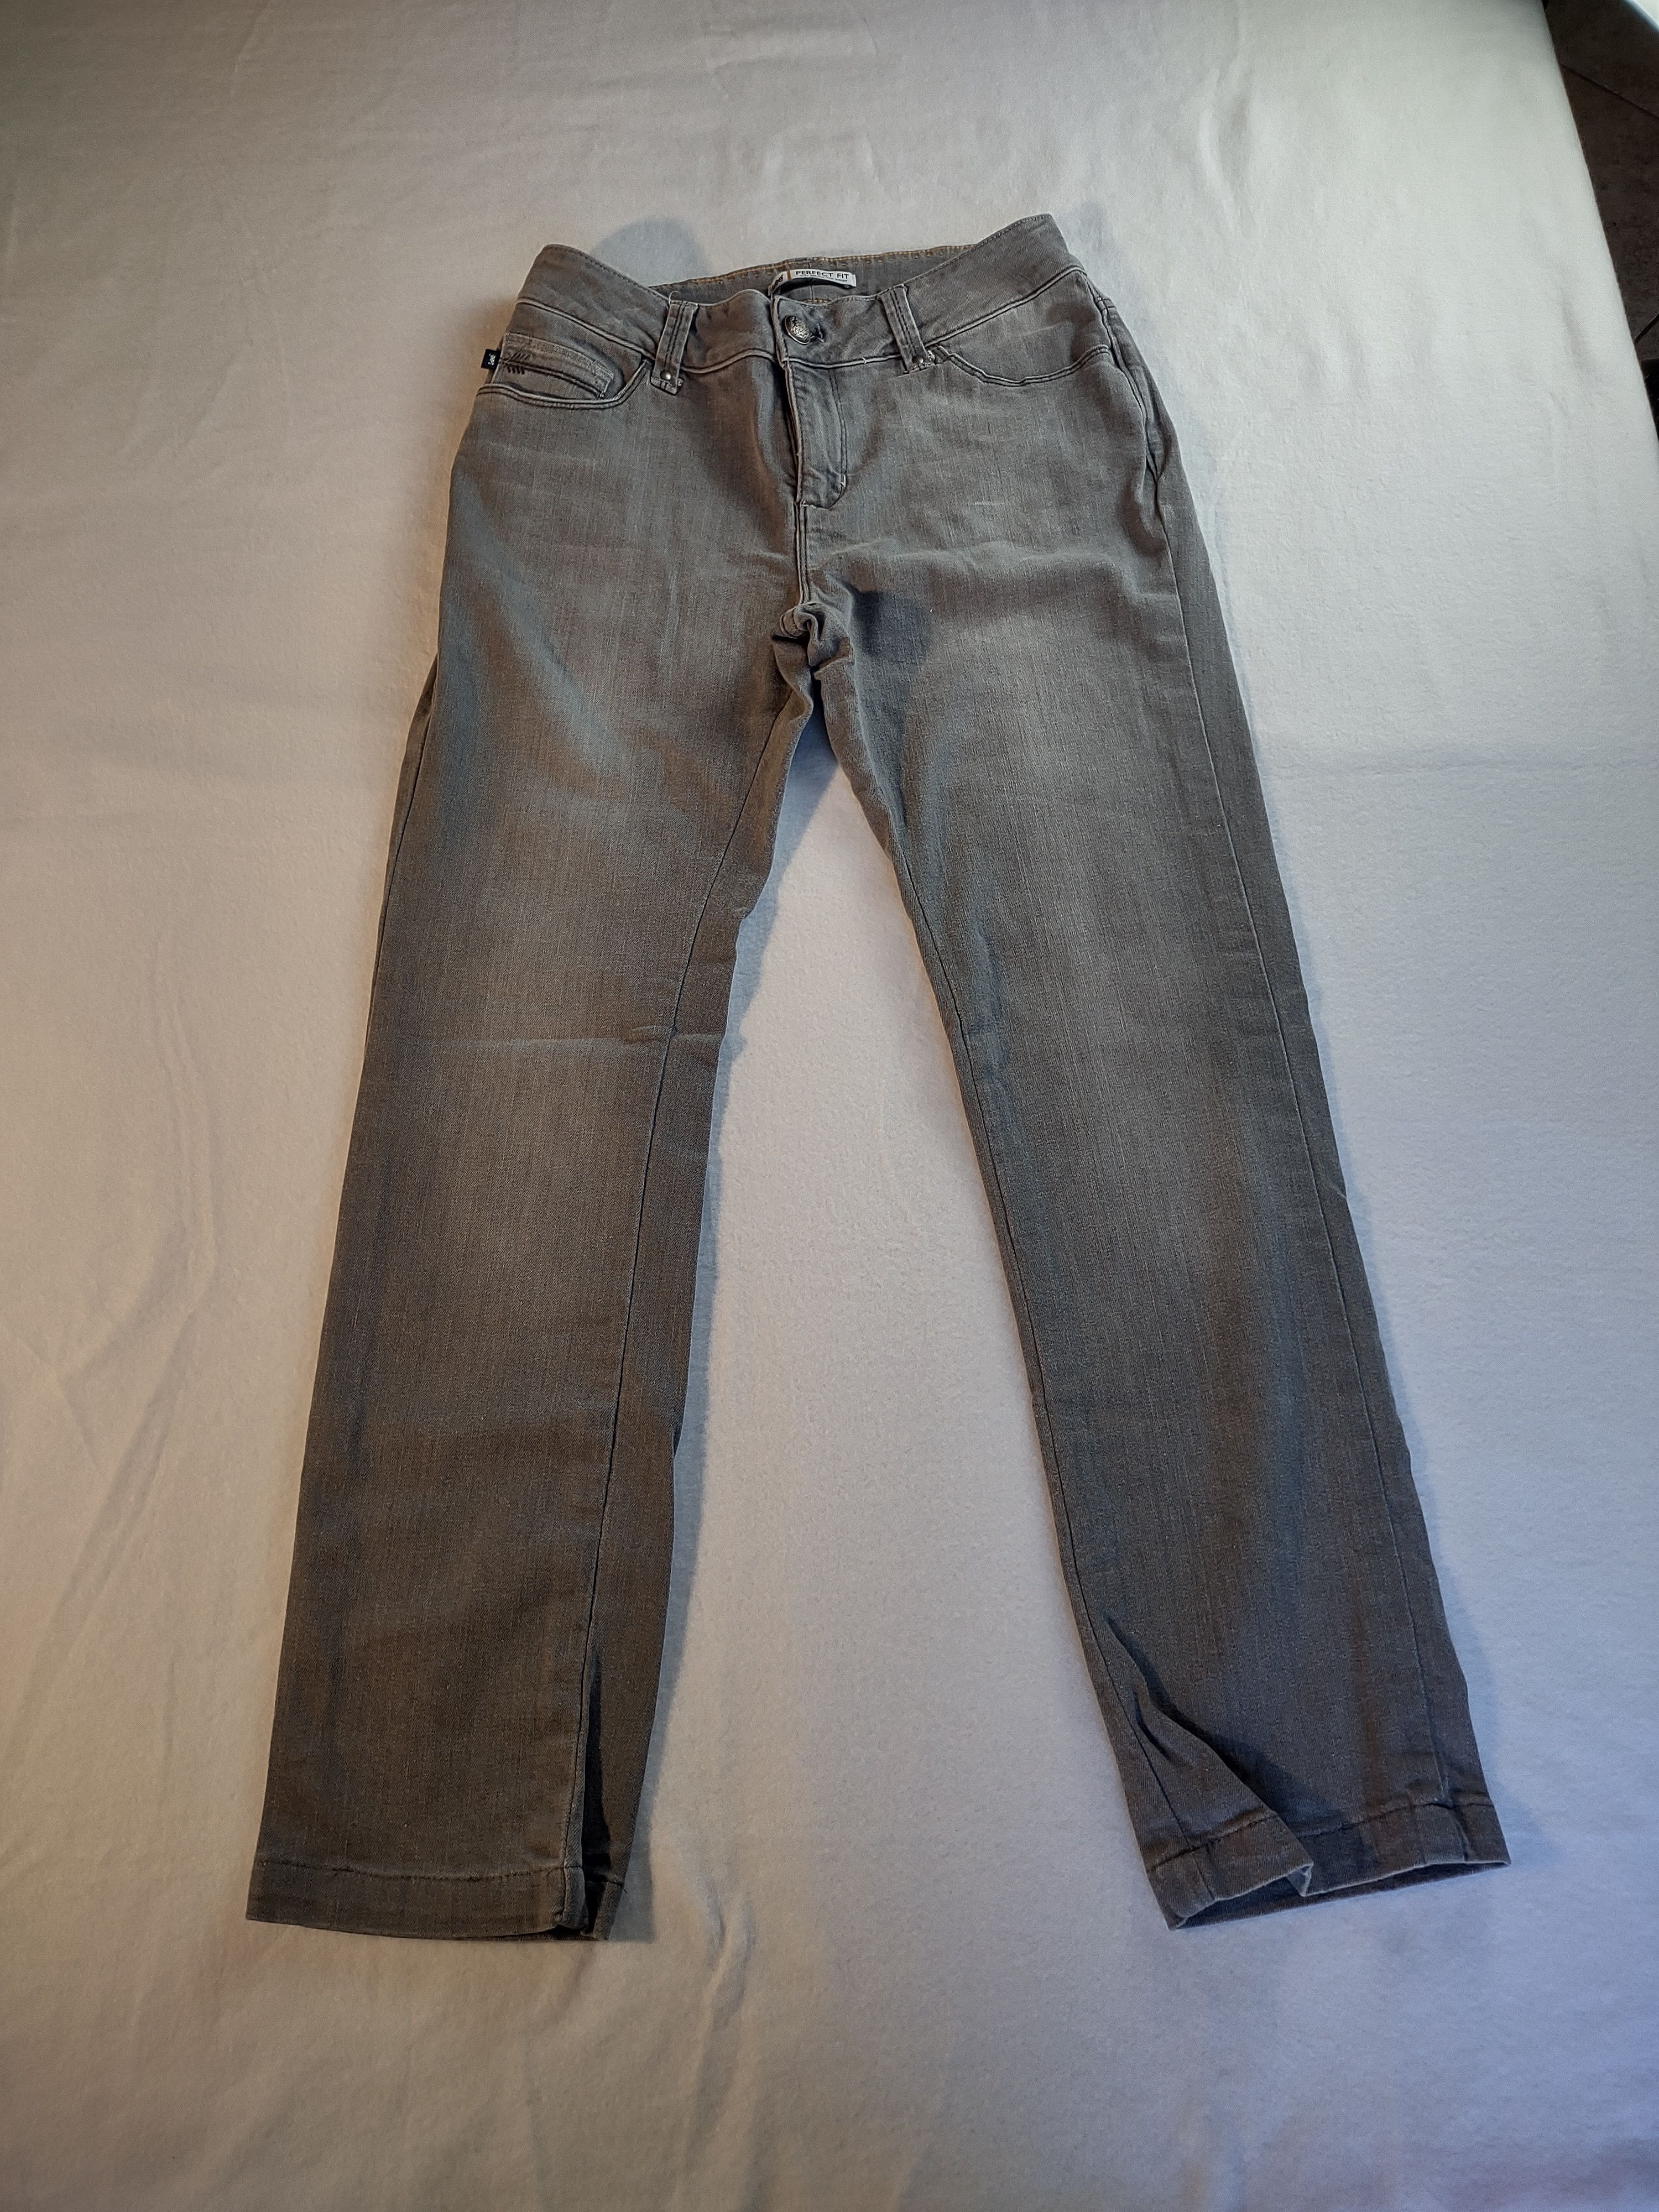 Lee Lee Perfect Fit Just Below Waist denim jeans gray ash wash Size 28" / US 6 / IT 42 - 13 Thumbnail